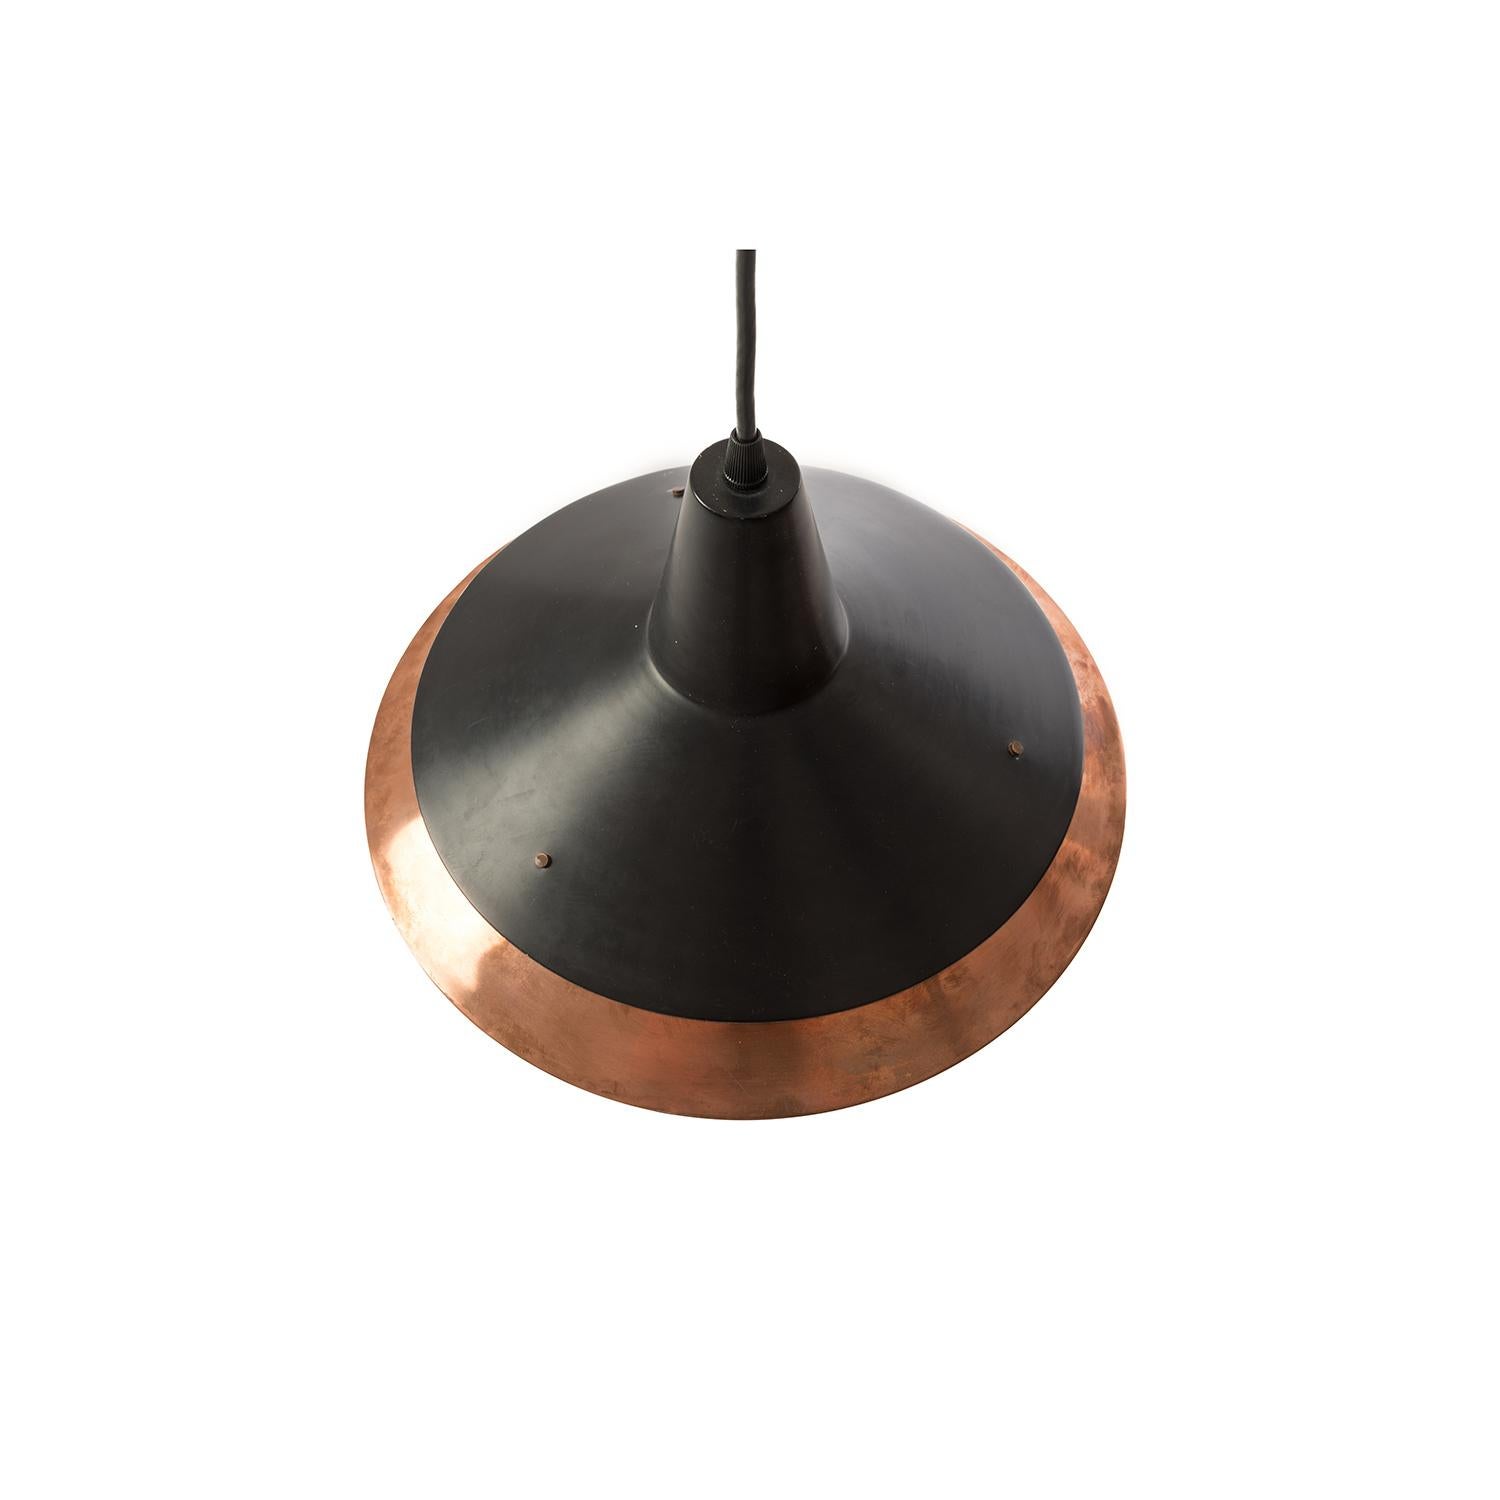 Scandinavian Modern Vintage Lantern Shaped Pendant Fixture in Black and Copper 1